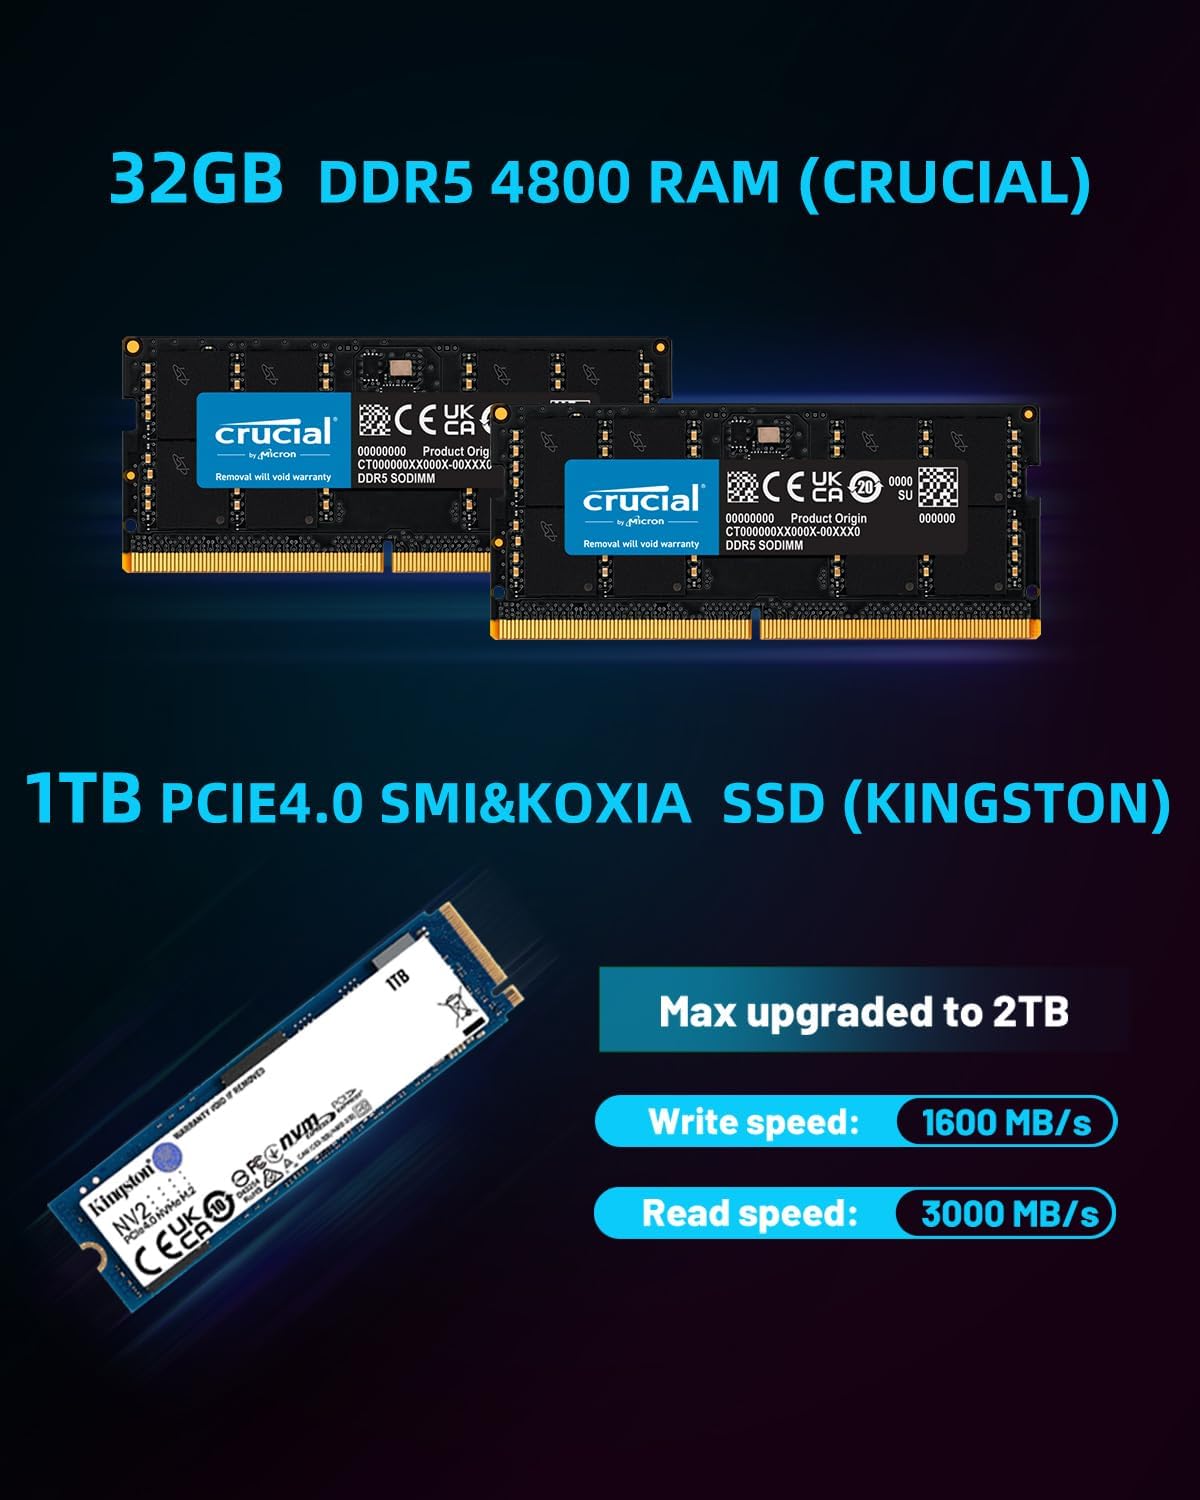 Mini PC NiPoGi AM08 Pro - Ryzen 7 7735HS, DDR5 32Go, SSD 512Go, Radeon  680M, WiFi 6, W11 Pro (USB-C, 4x USB, 2x HDMI, RJ45) - Vendeur tiers –